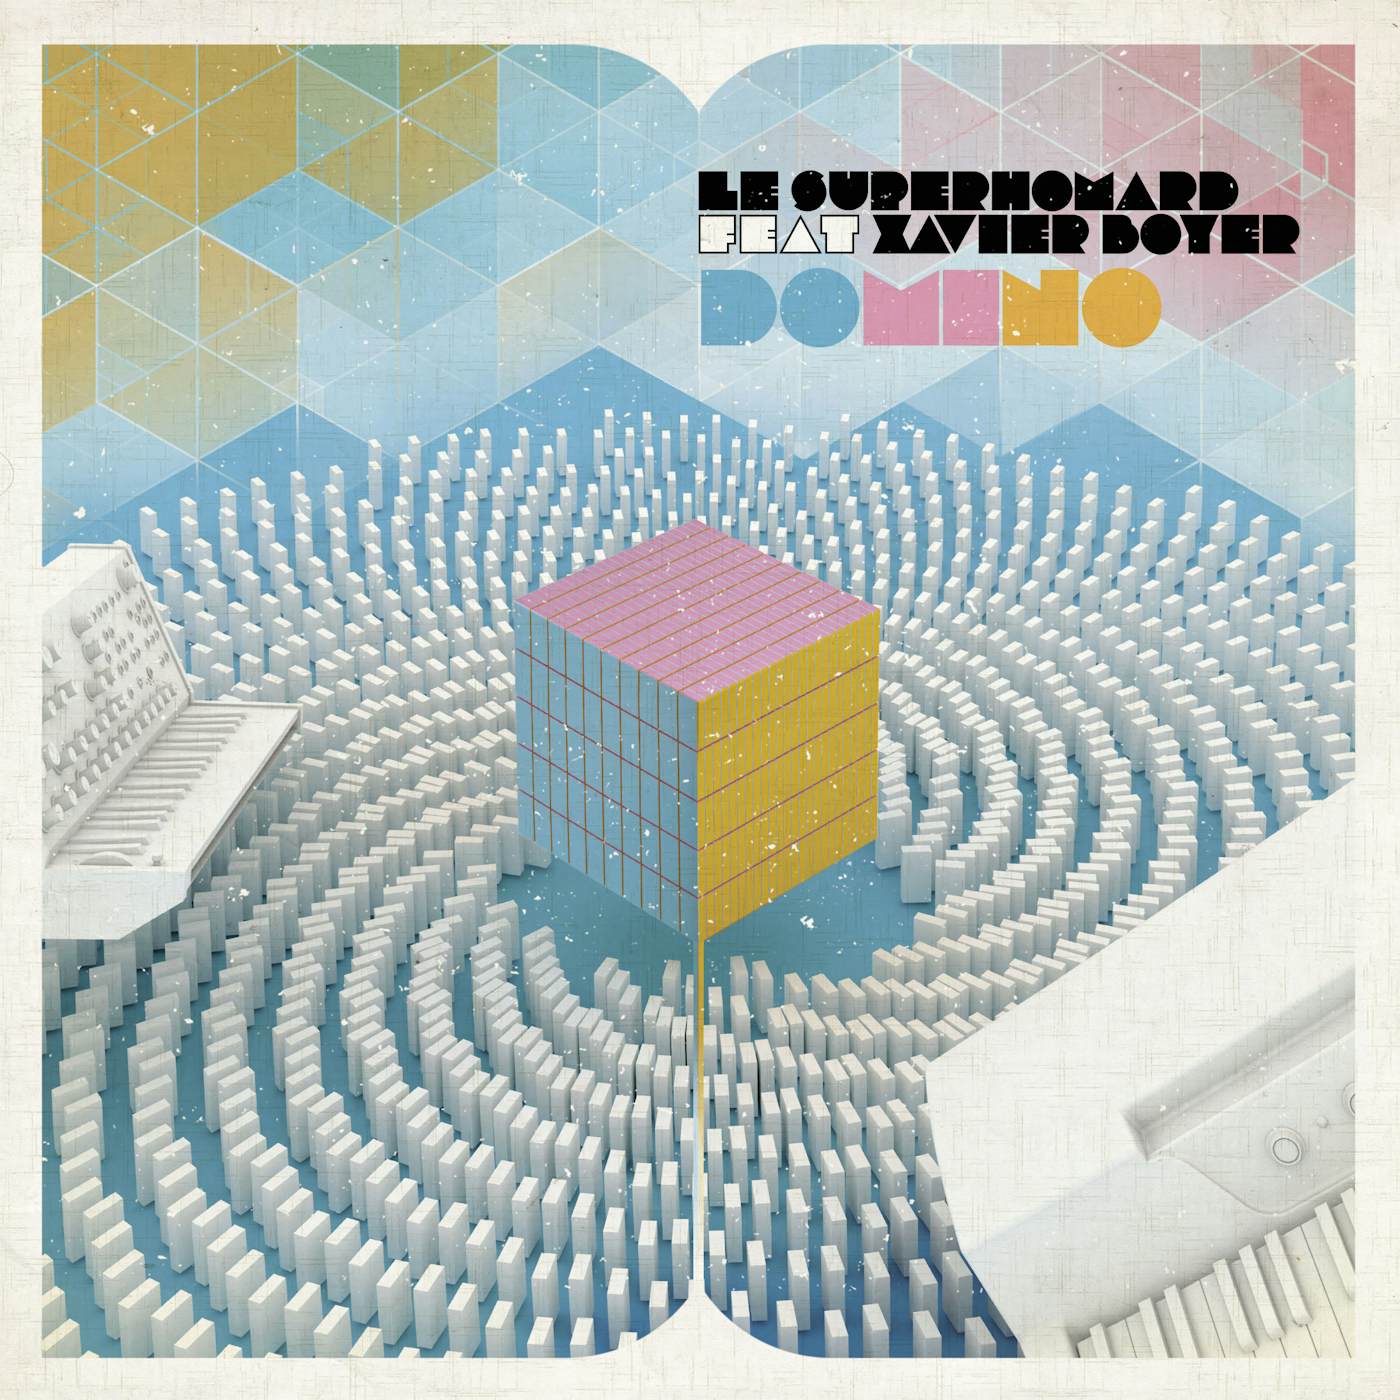 Le Superhomard / Xavier Boyer DOMINO Vinyl Record